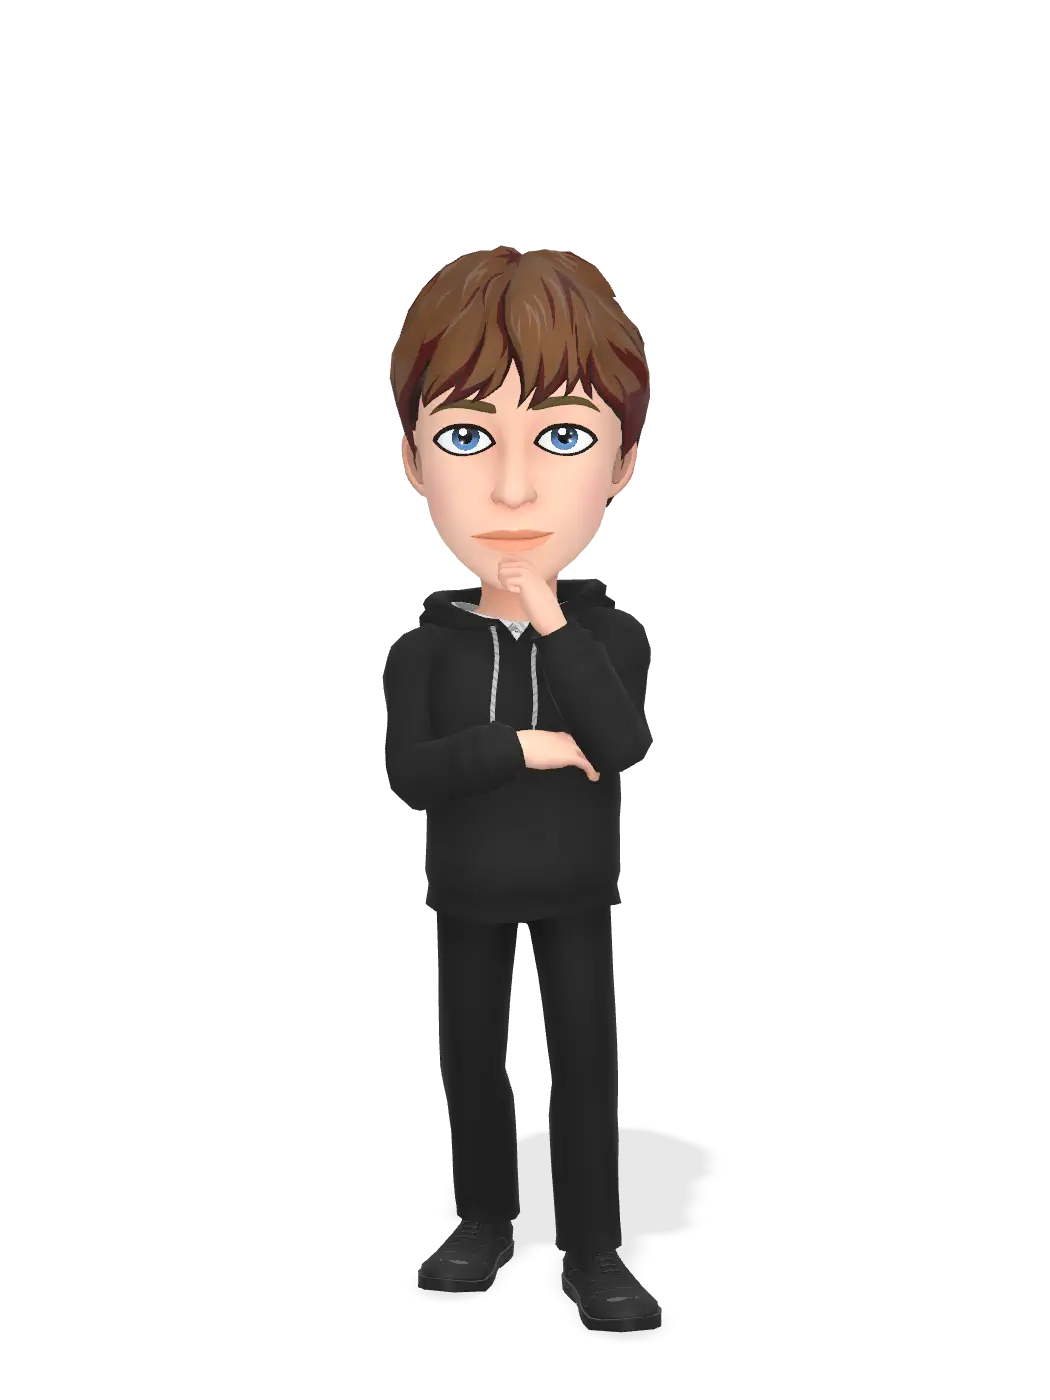 3D Bitmoji for hejfin avatar